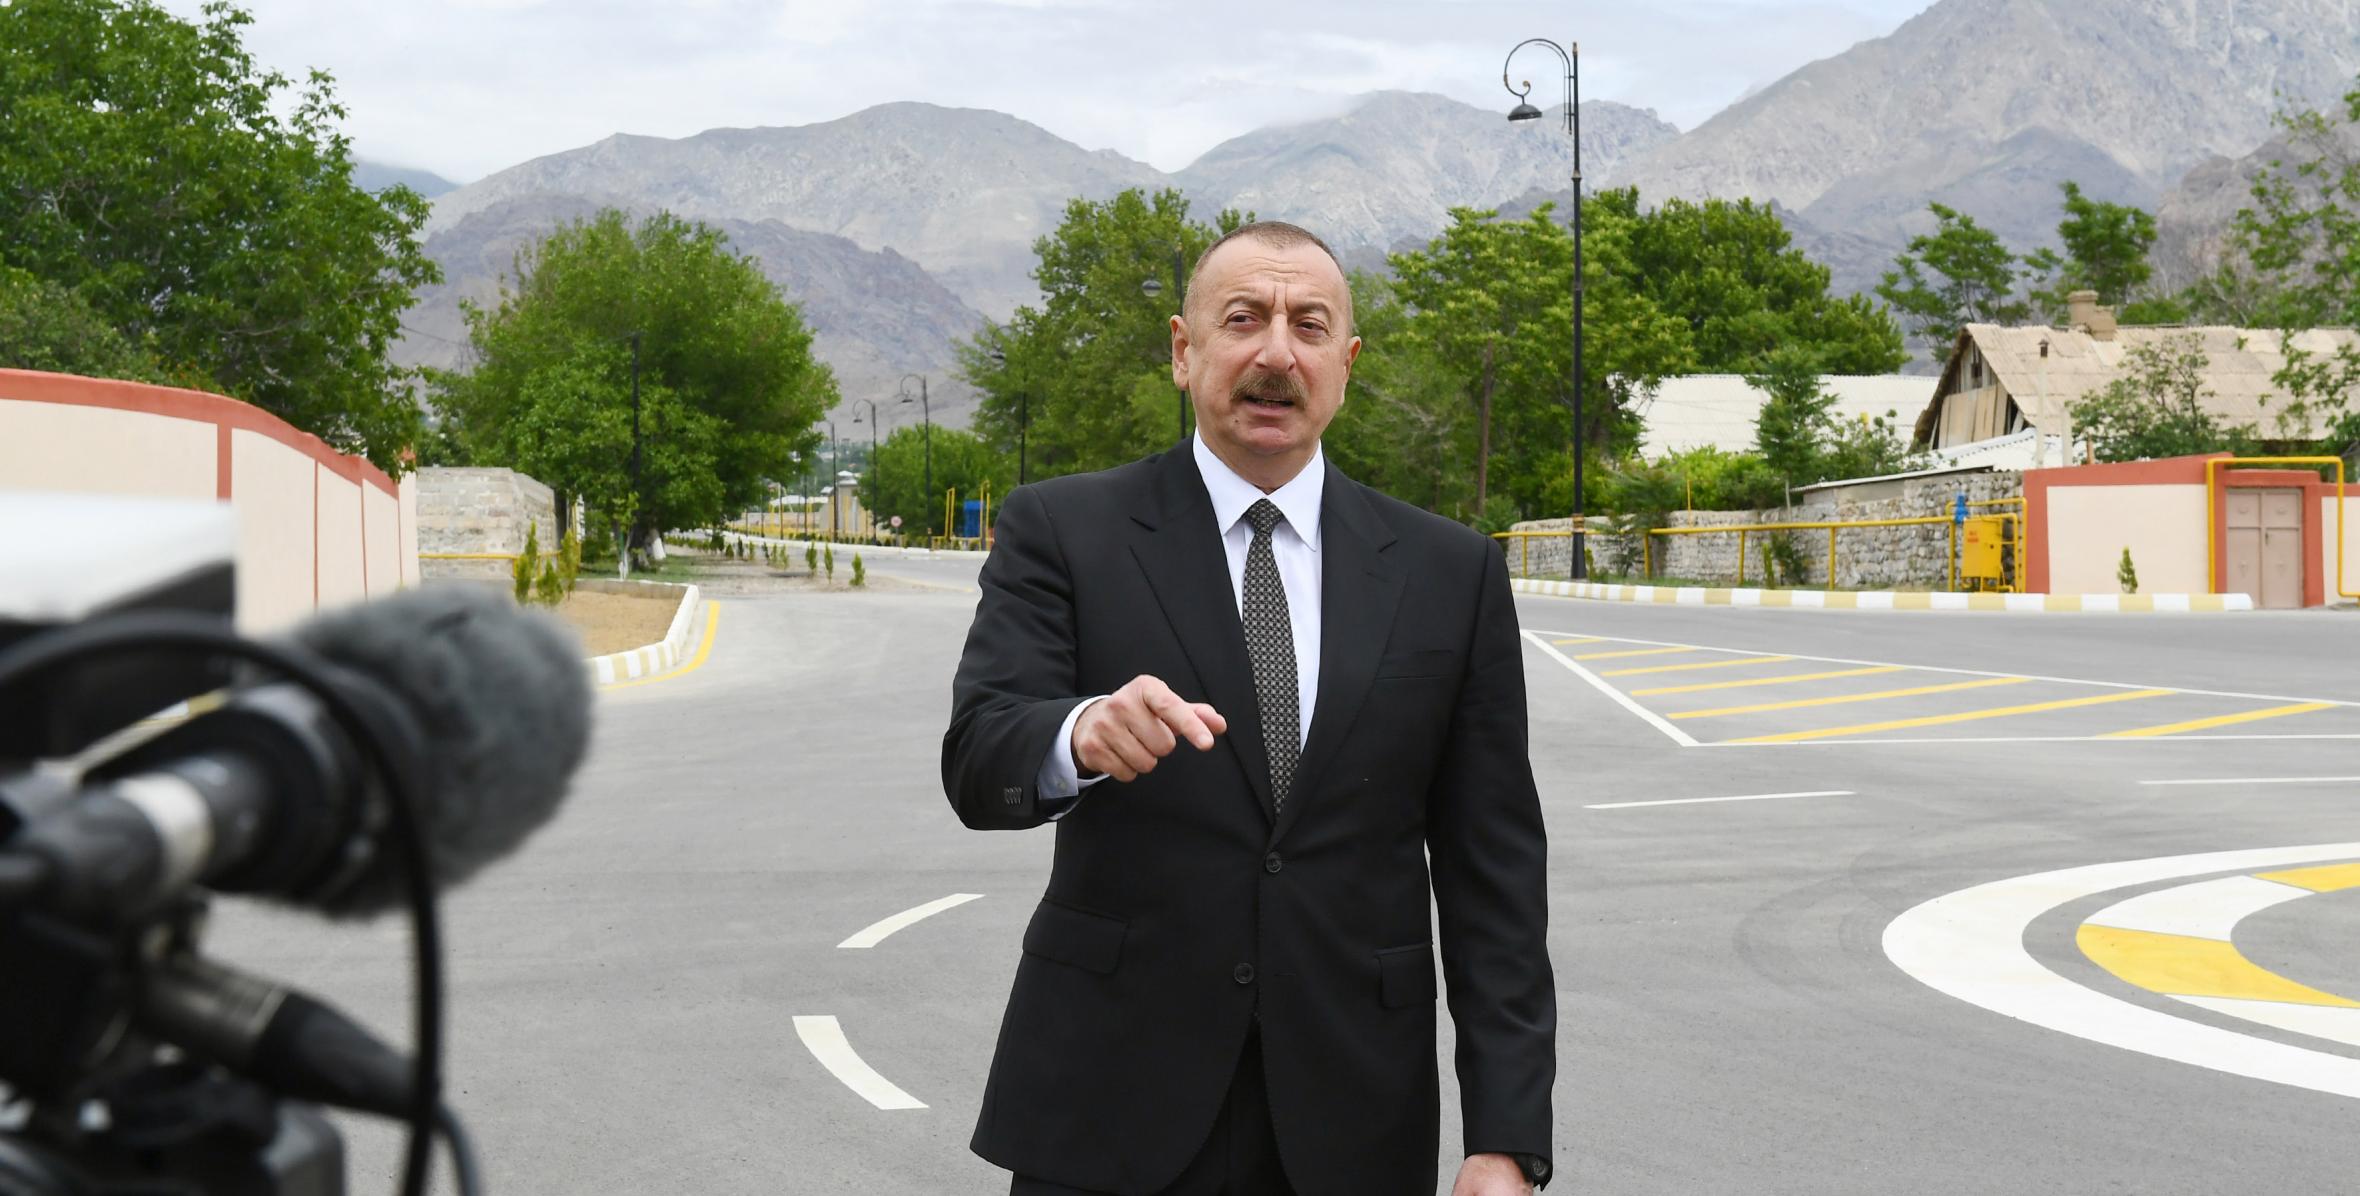 Ilham Aliyev was interviewed by Azerbaijan Television